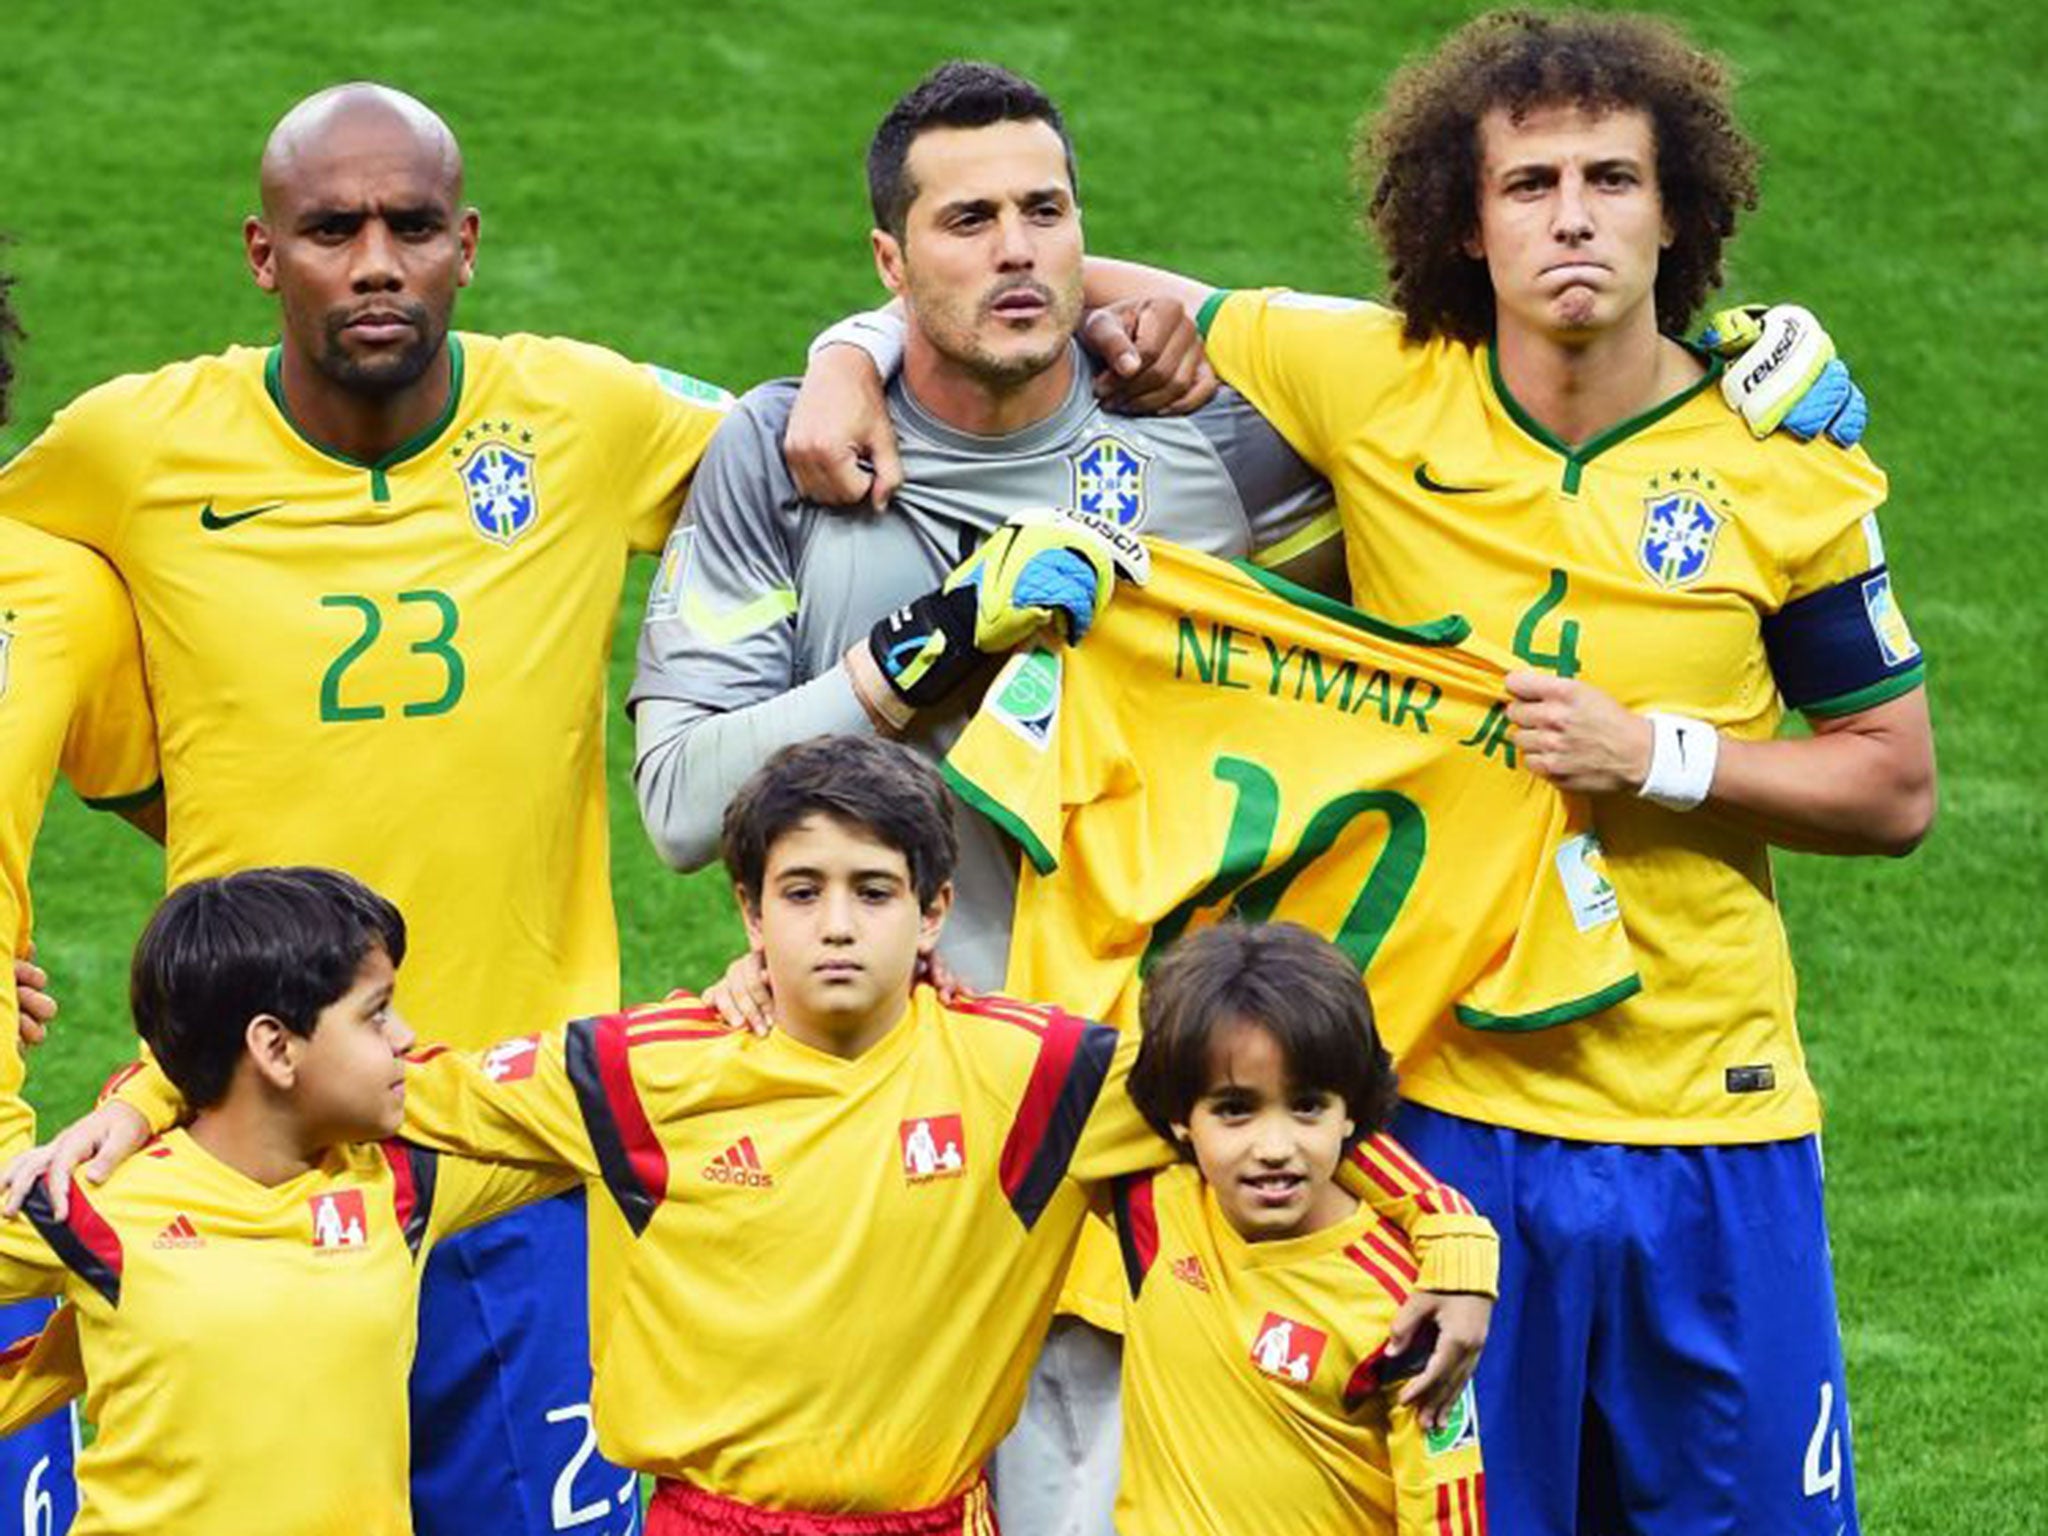 Julio Cesar and David Luiz hold the Neymar shirt